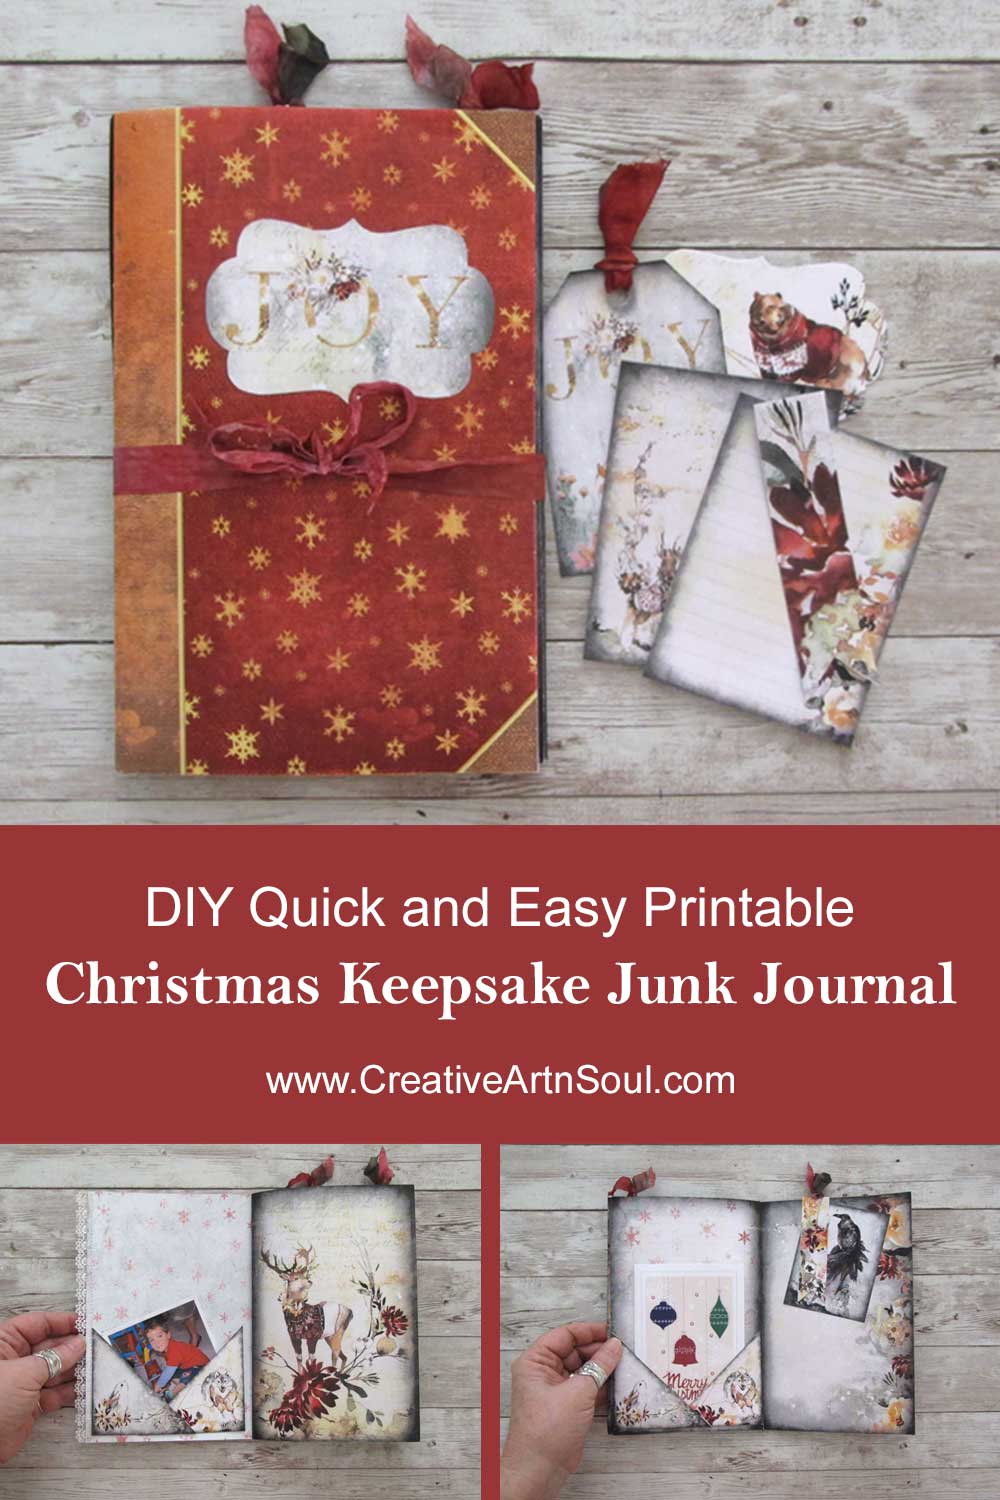 How to Make a Quick and Easy Printable Christmas Keepsake Journal